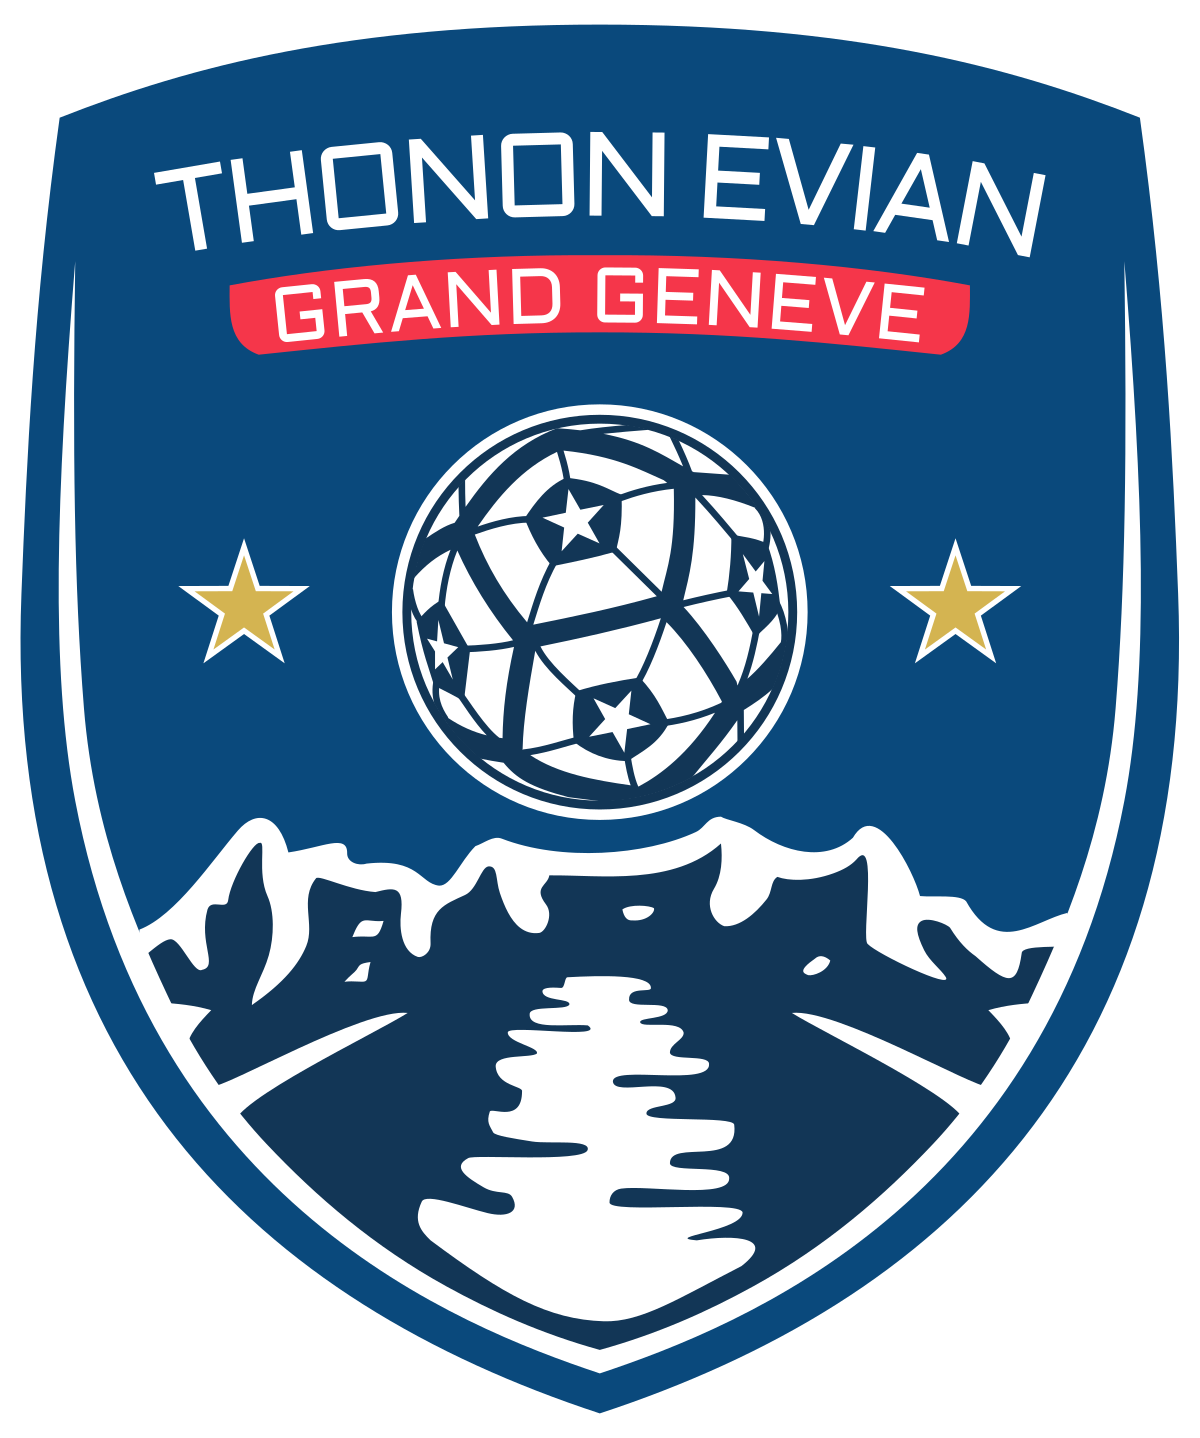 Football club Thonon Evian Grand Genève - logo blason